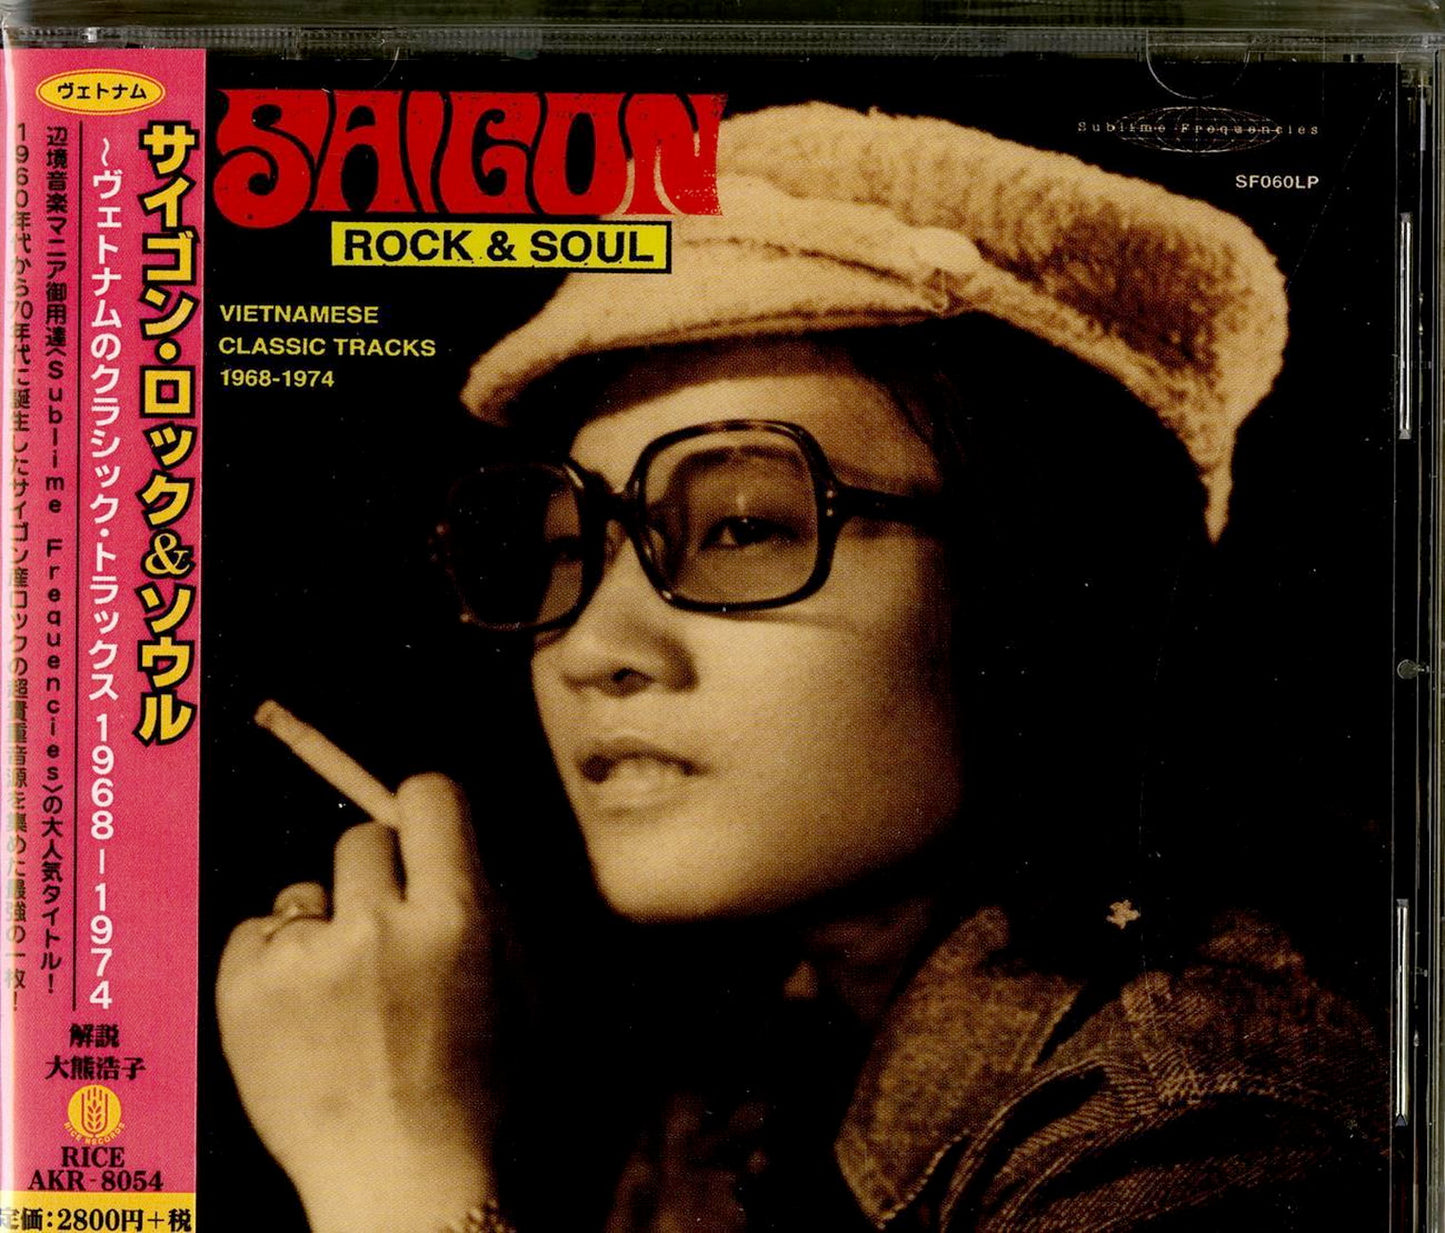 V.A. - Saigon Rock & Soul Vetnamese Classic Tracks 1968-1974 - Japan  CD